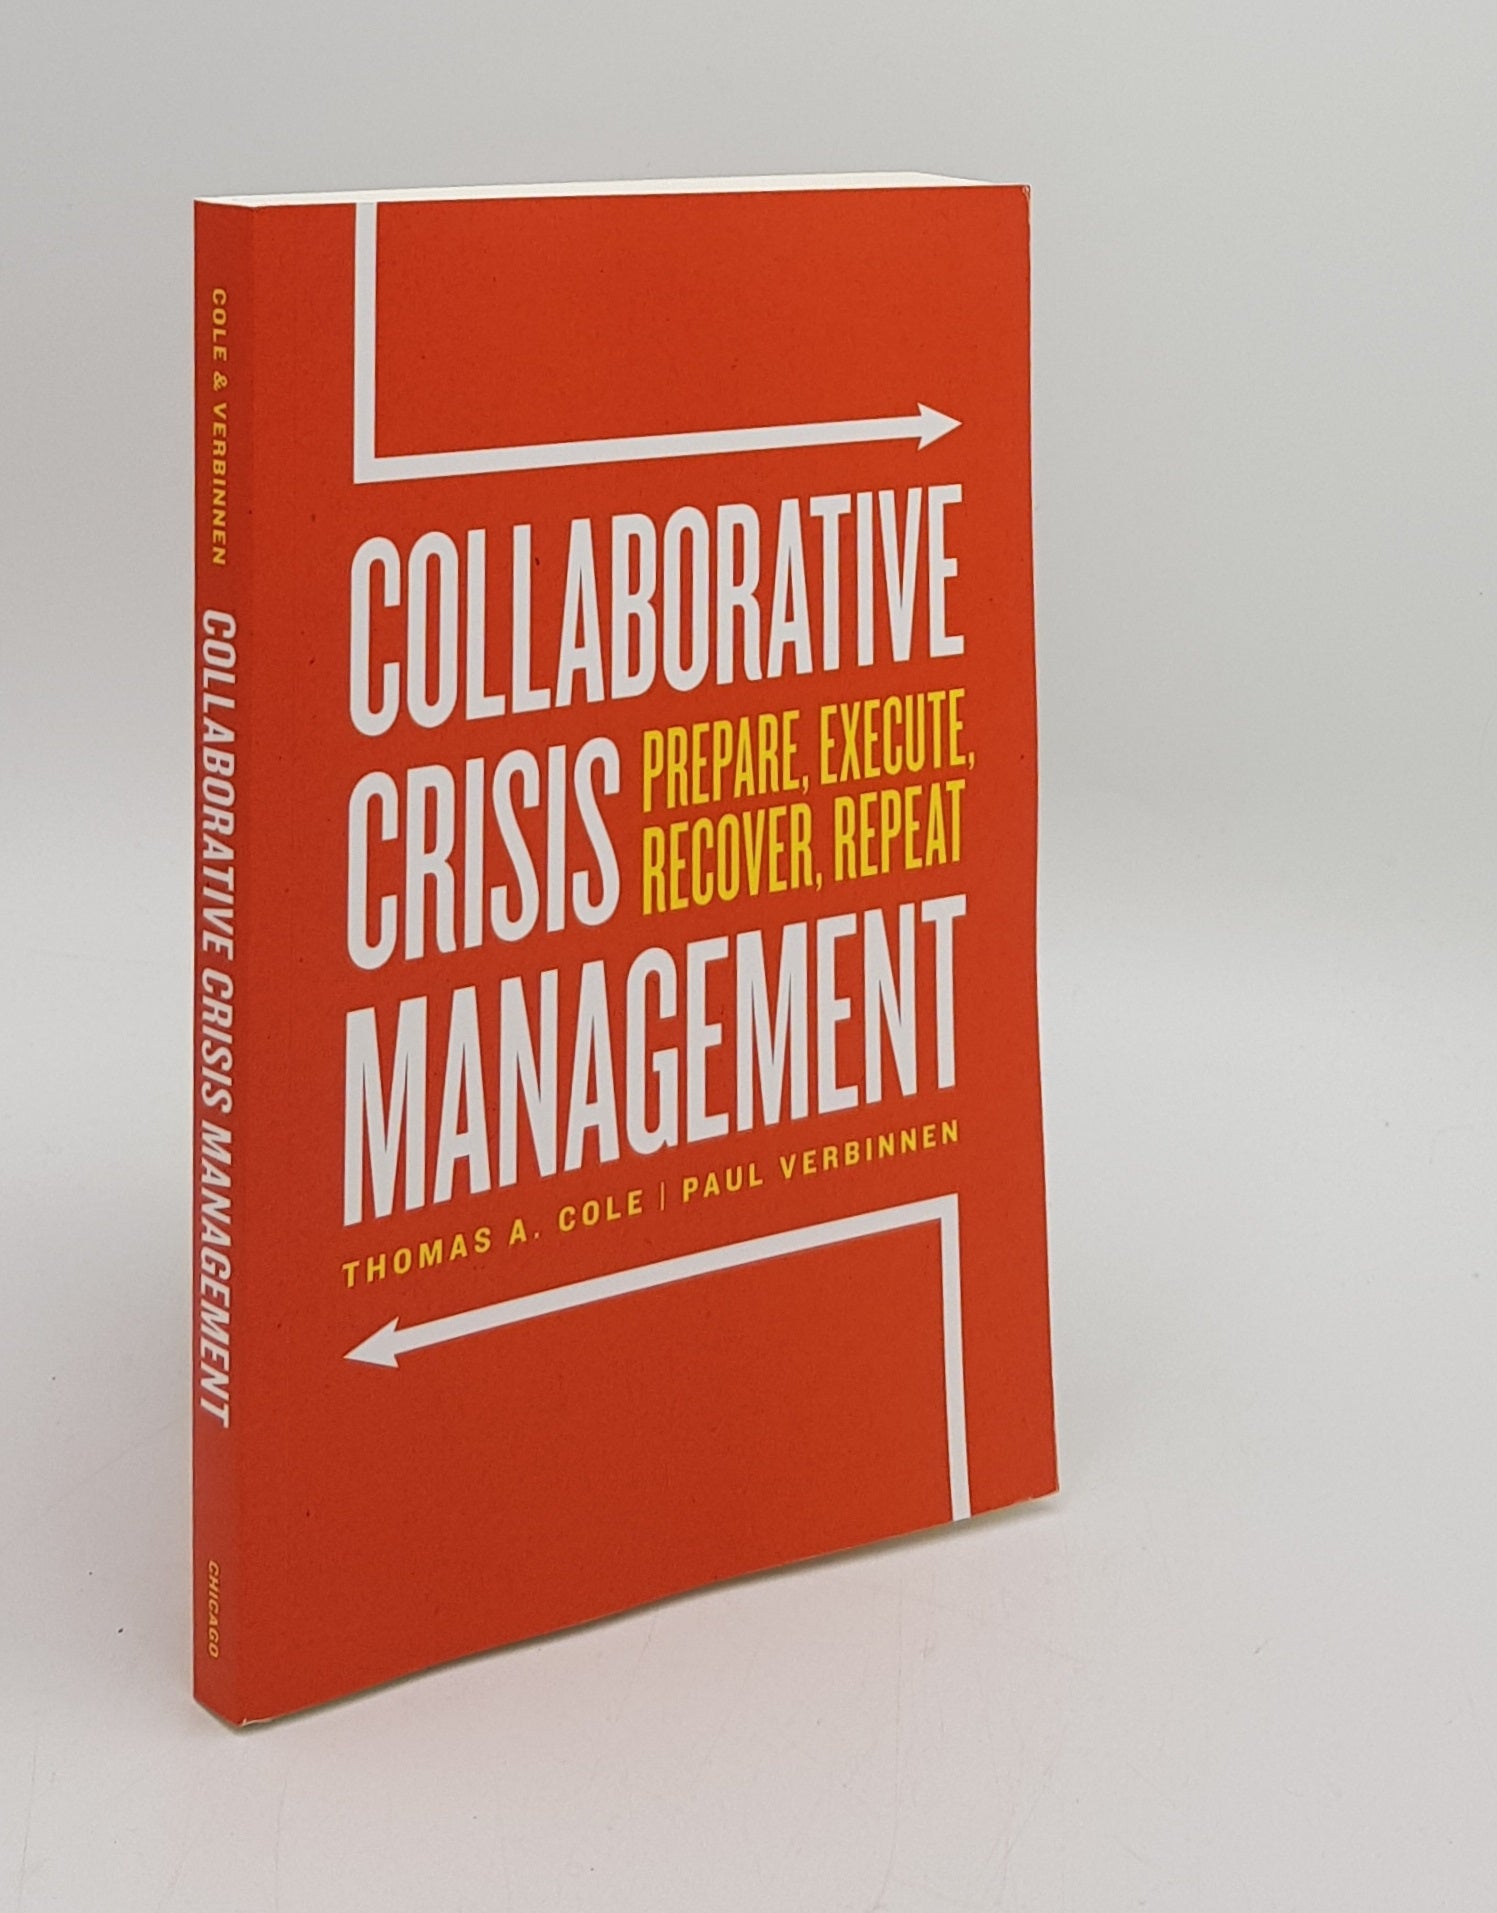 COLE Thomas A., VERBINNEN Paul - Collaborative Crisis Management Prepare Execute Recover Repeat